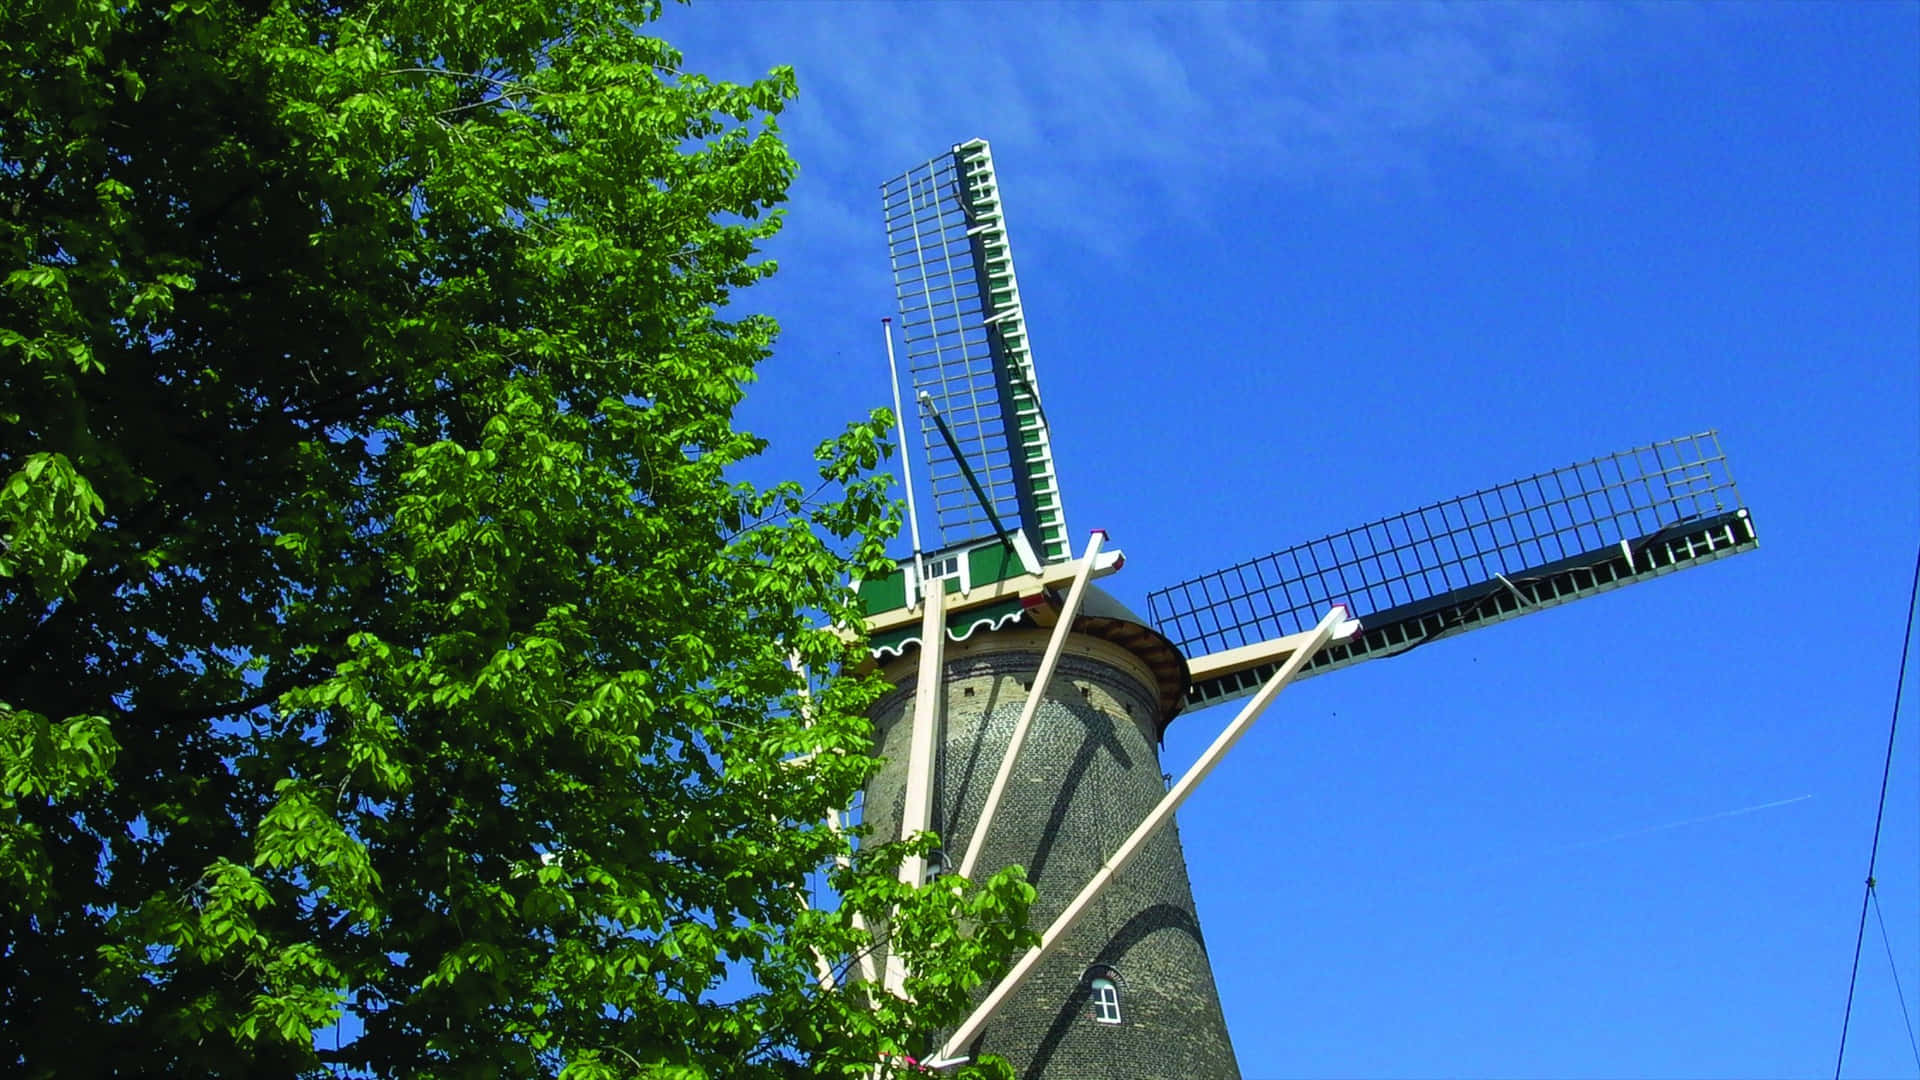 Delft Windmill Against Blue Sky Wallpaper